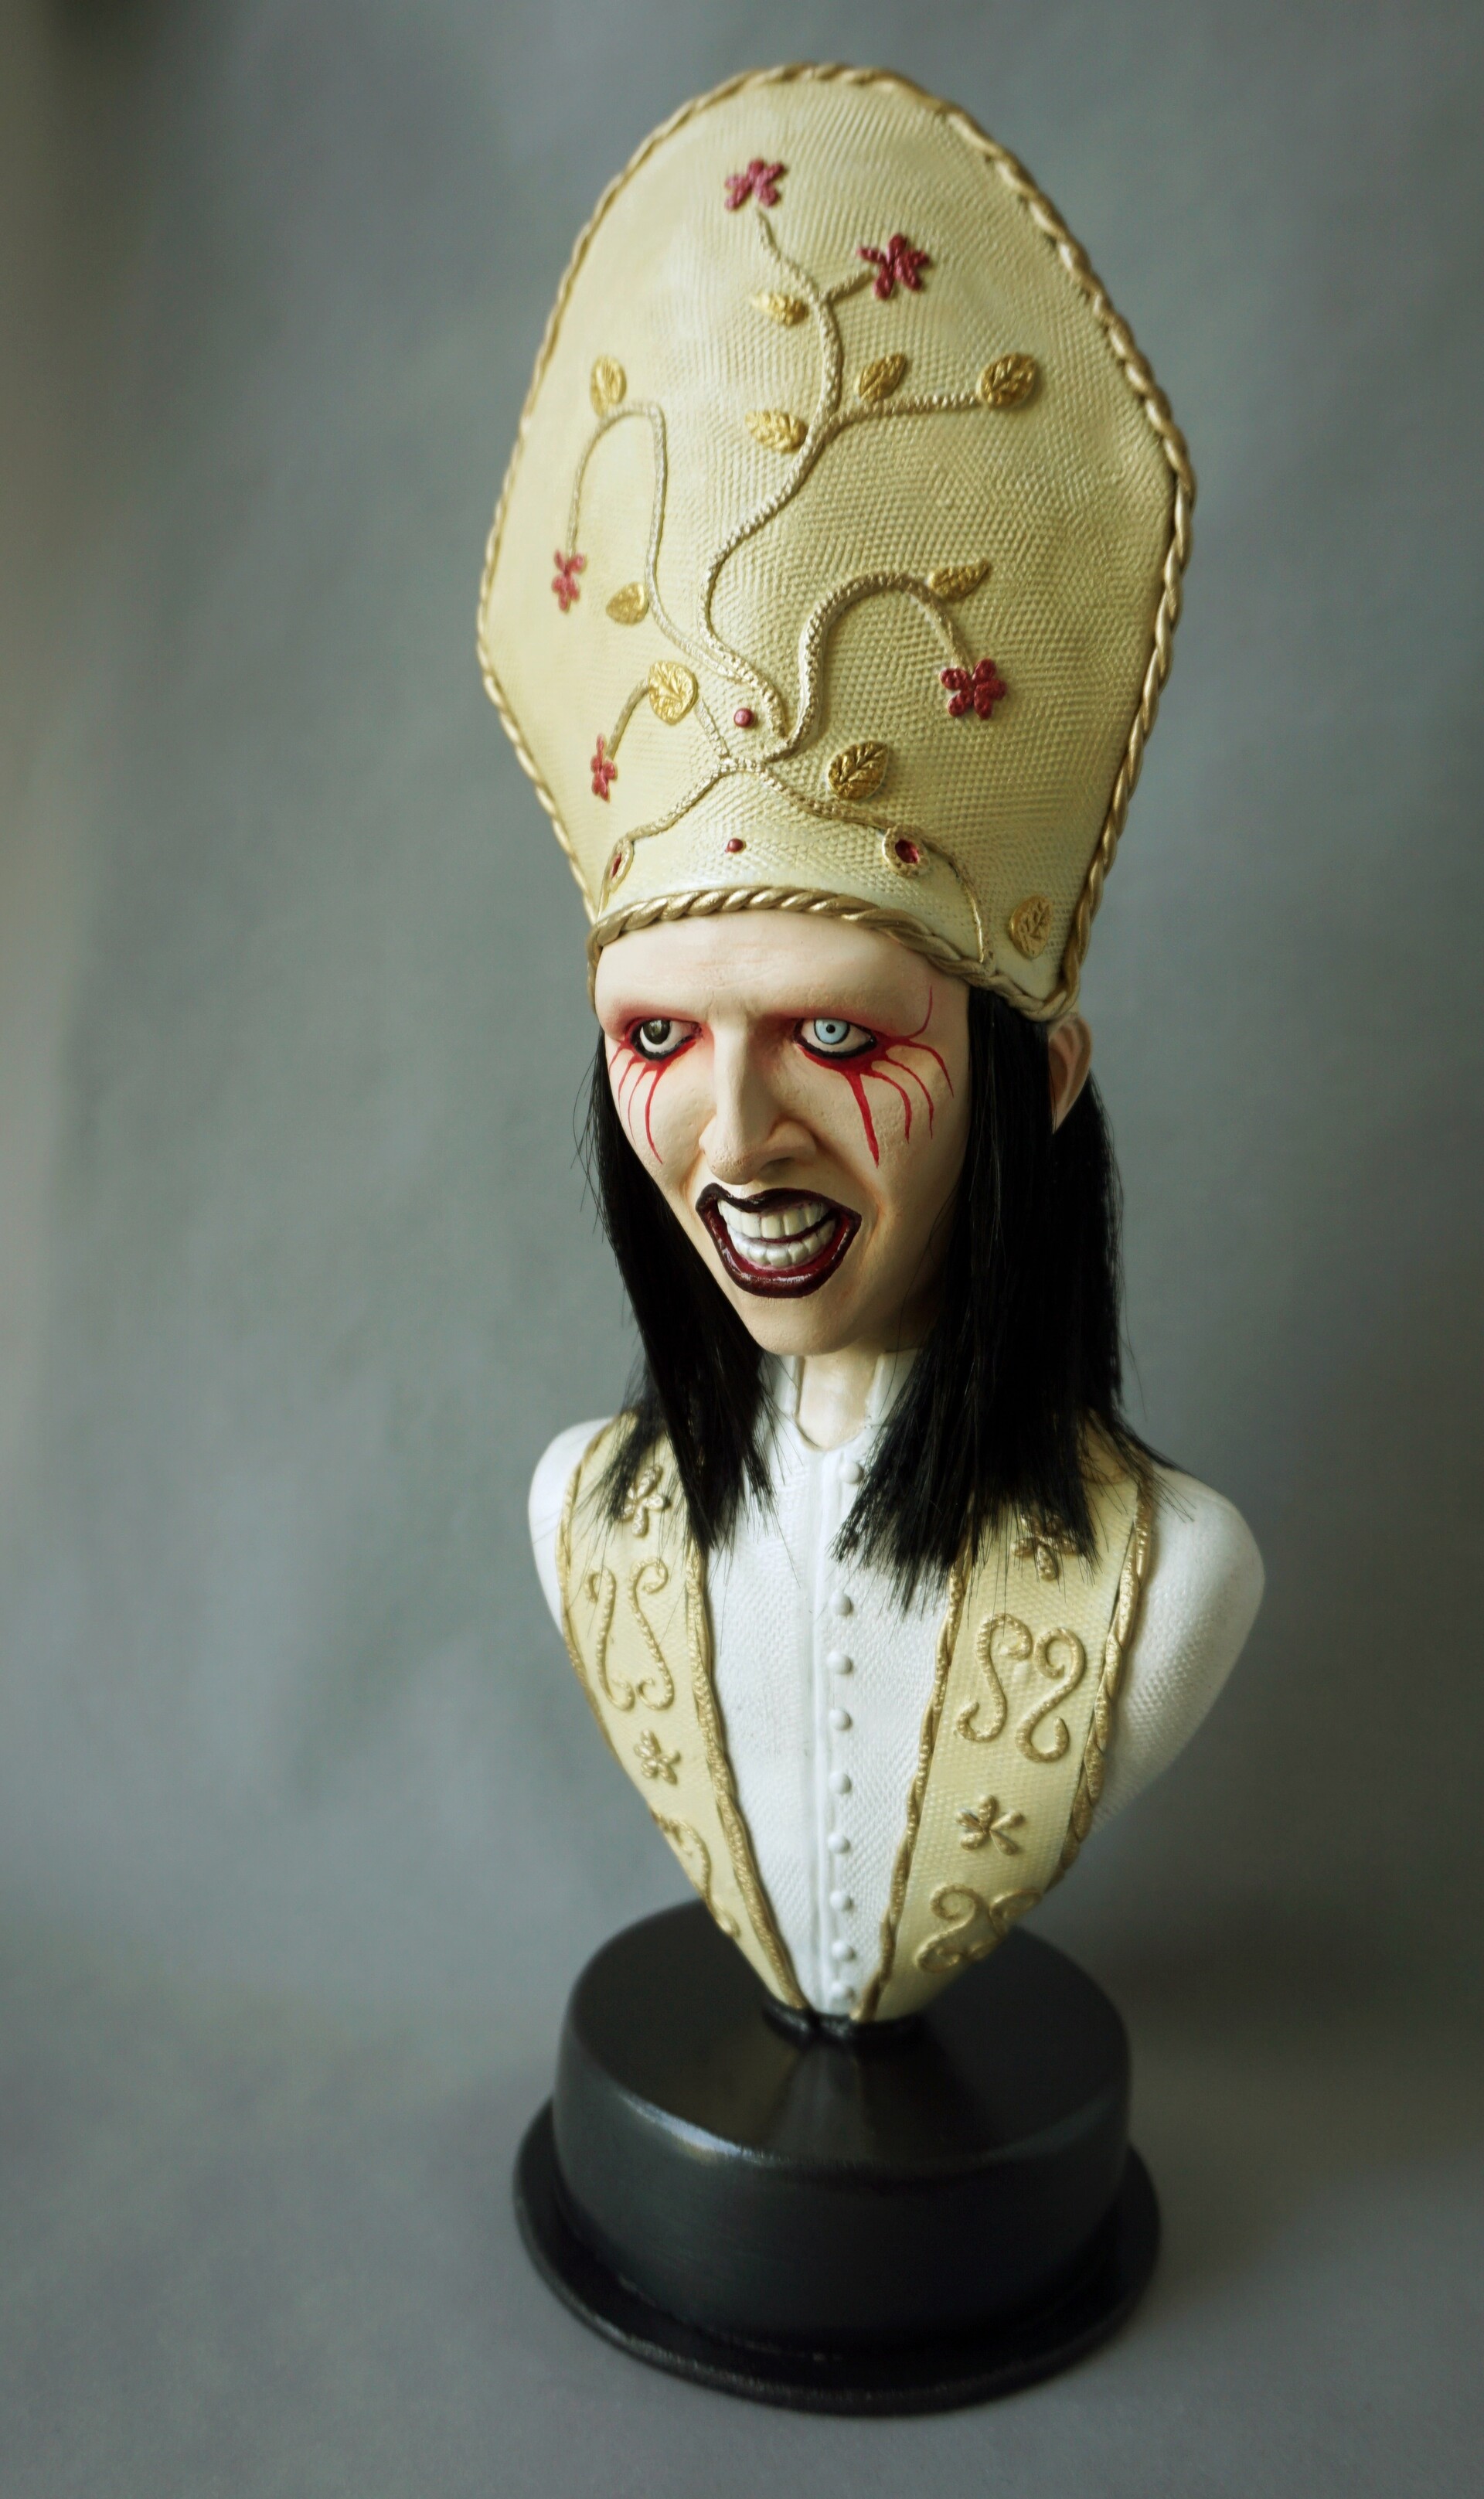 ArtStation - Marilyn Manson - Disposable Teens bust sculpture